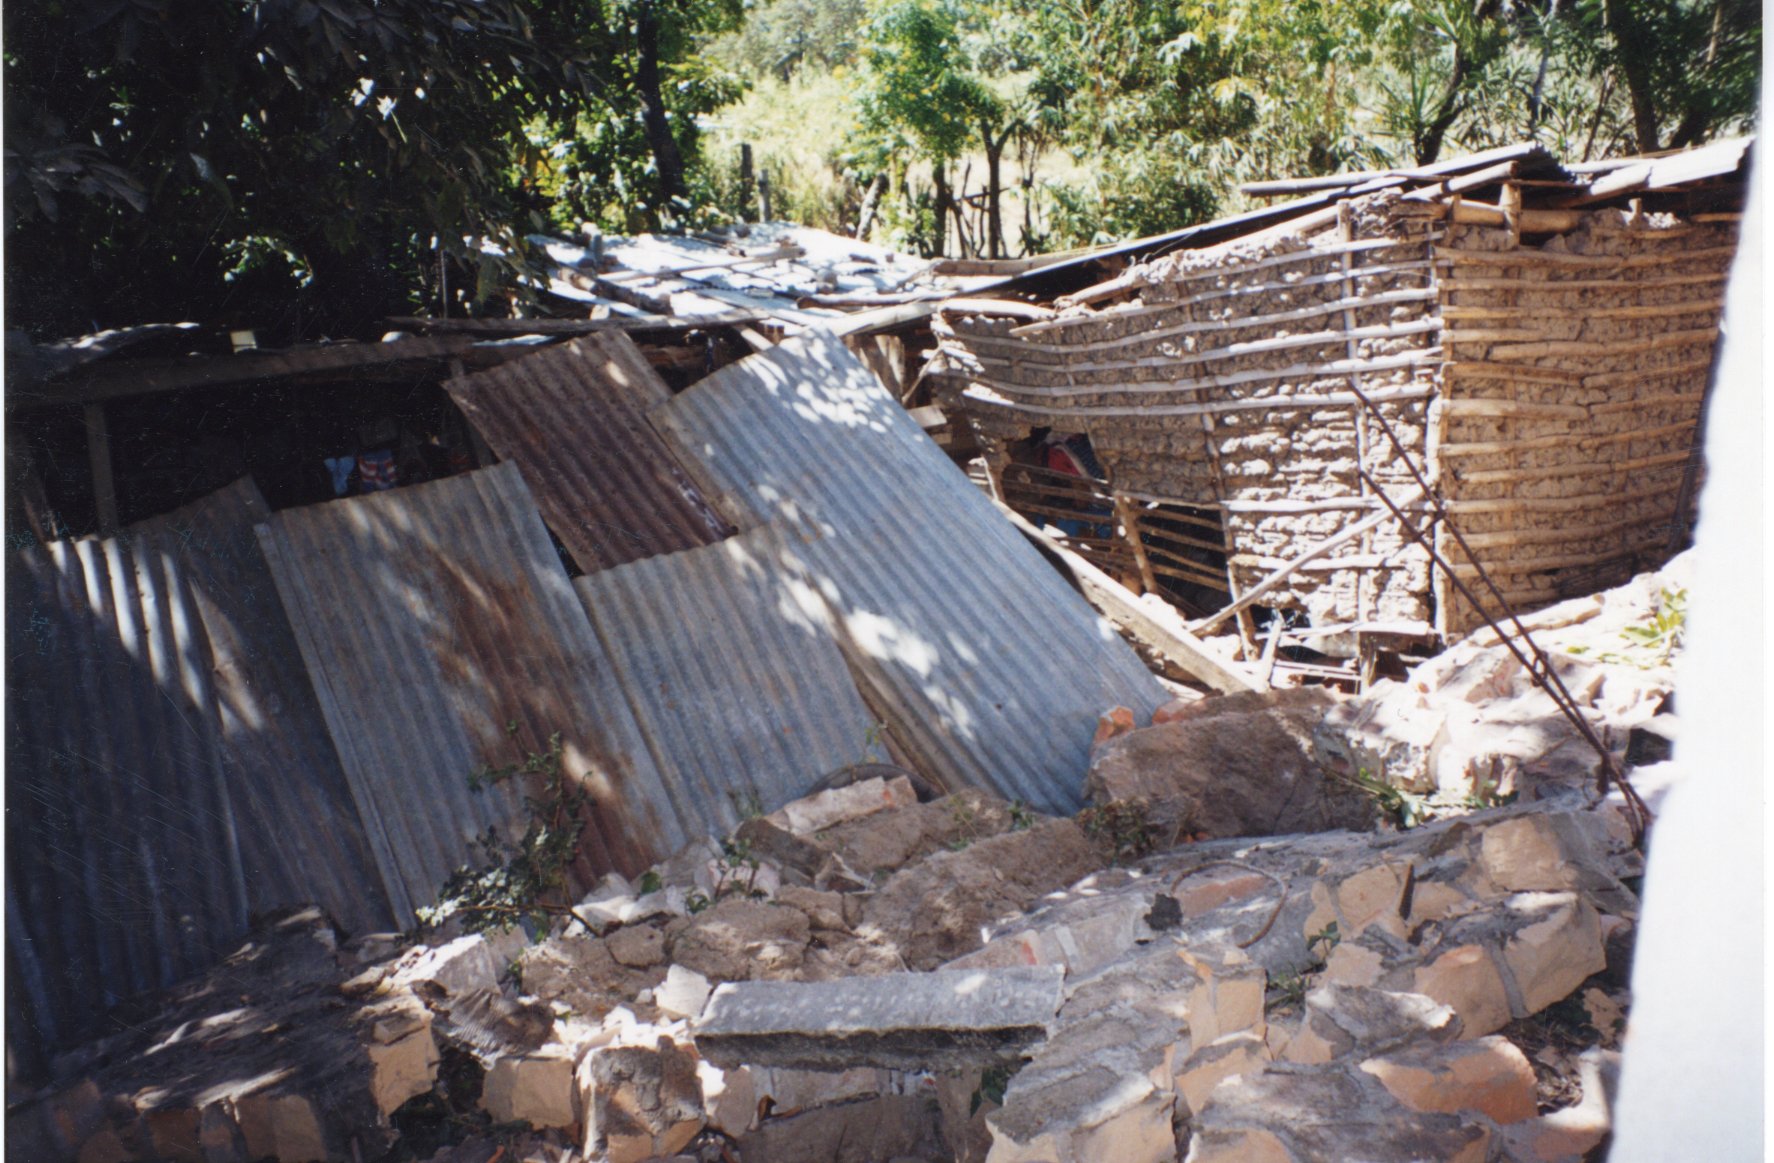 The ruins of a Salvadoran family's home, 2001